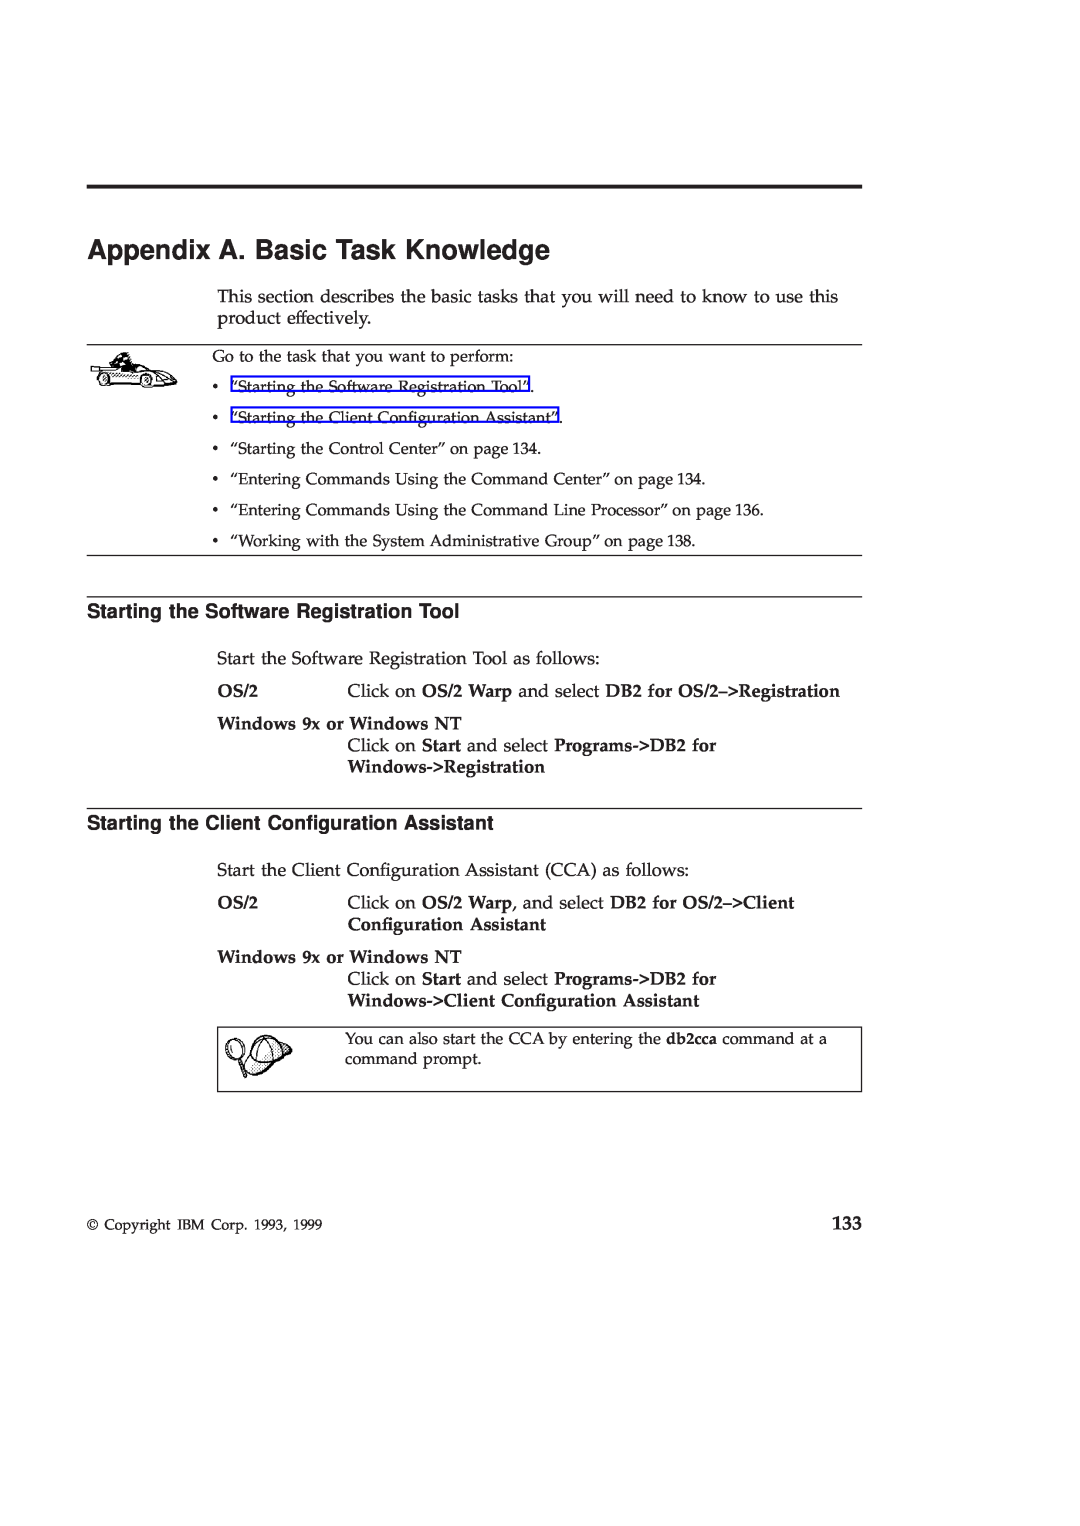 IBM GC09-2830-00 Appendix A. Basic Task Knowledge, Starting the Software Registration Tool, Windows-Registration, OS/2 